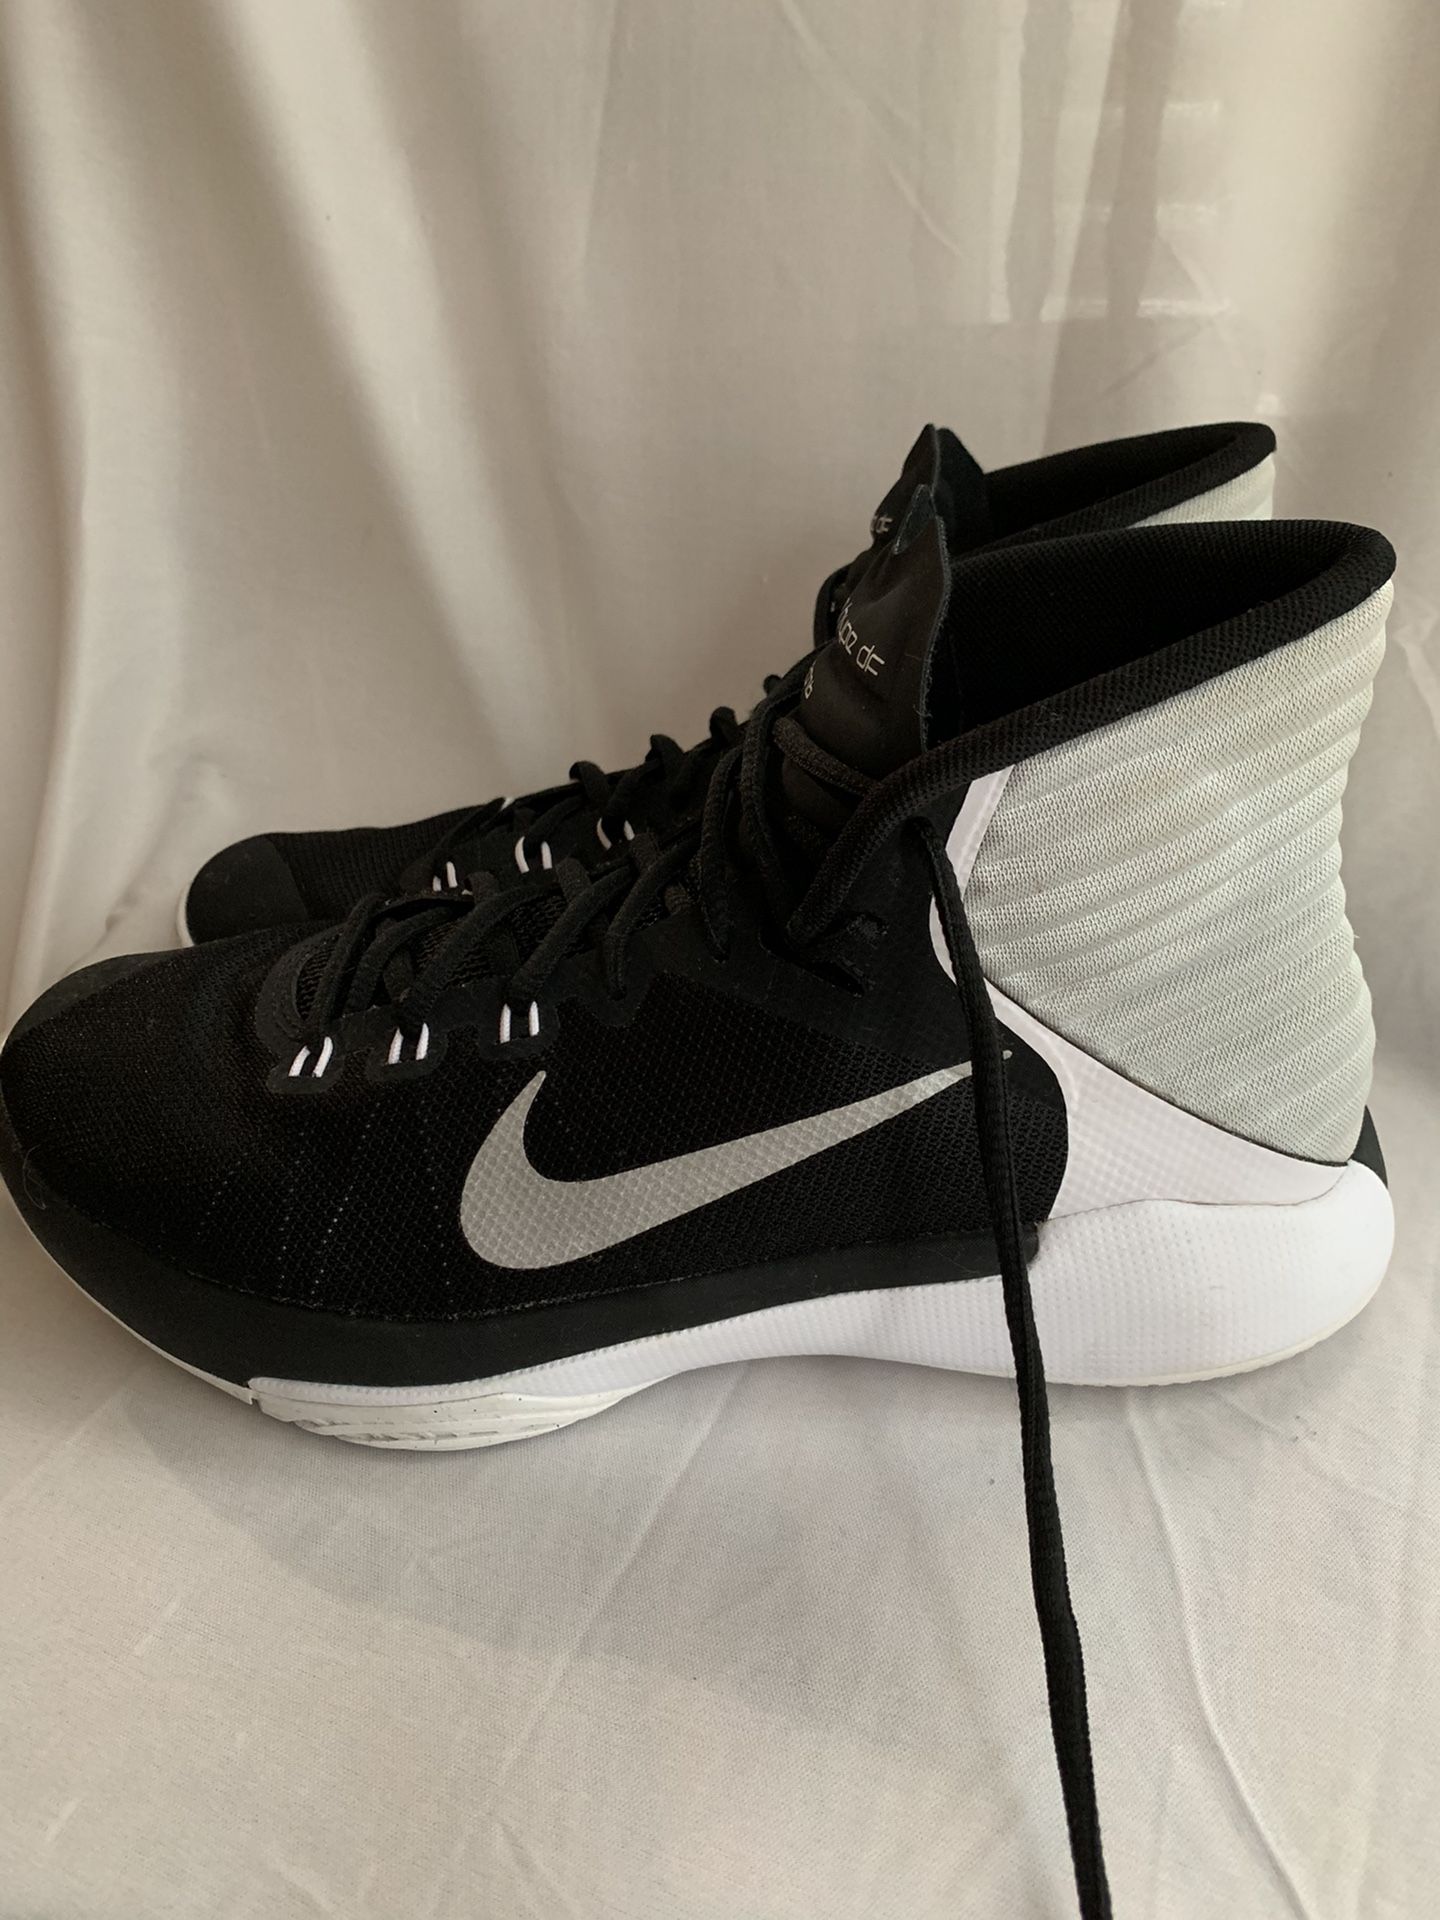 Women’s Nike Prime Hype DF 2016 Basketball Shoes Size 11M